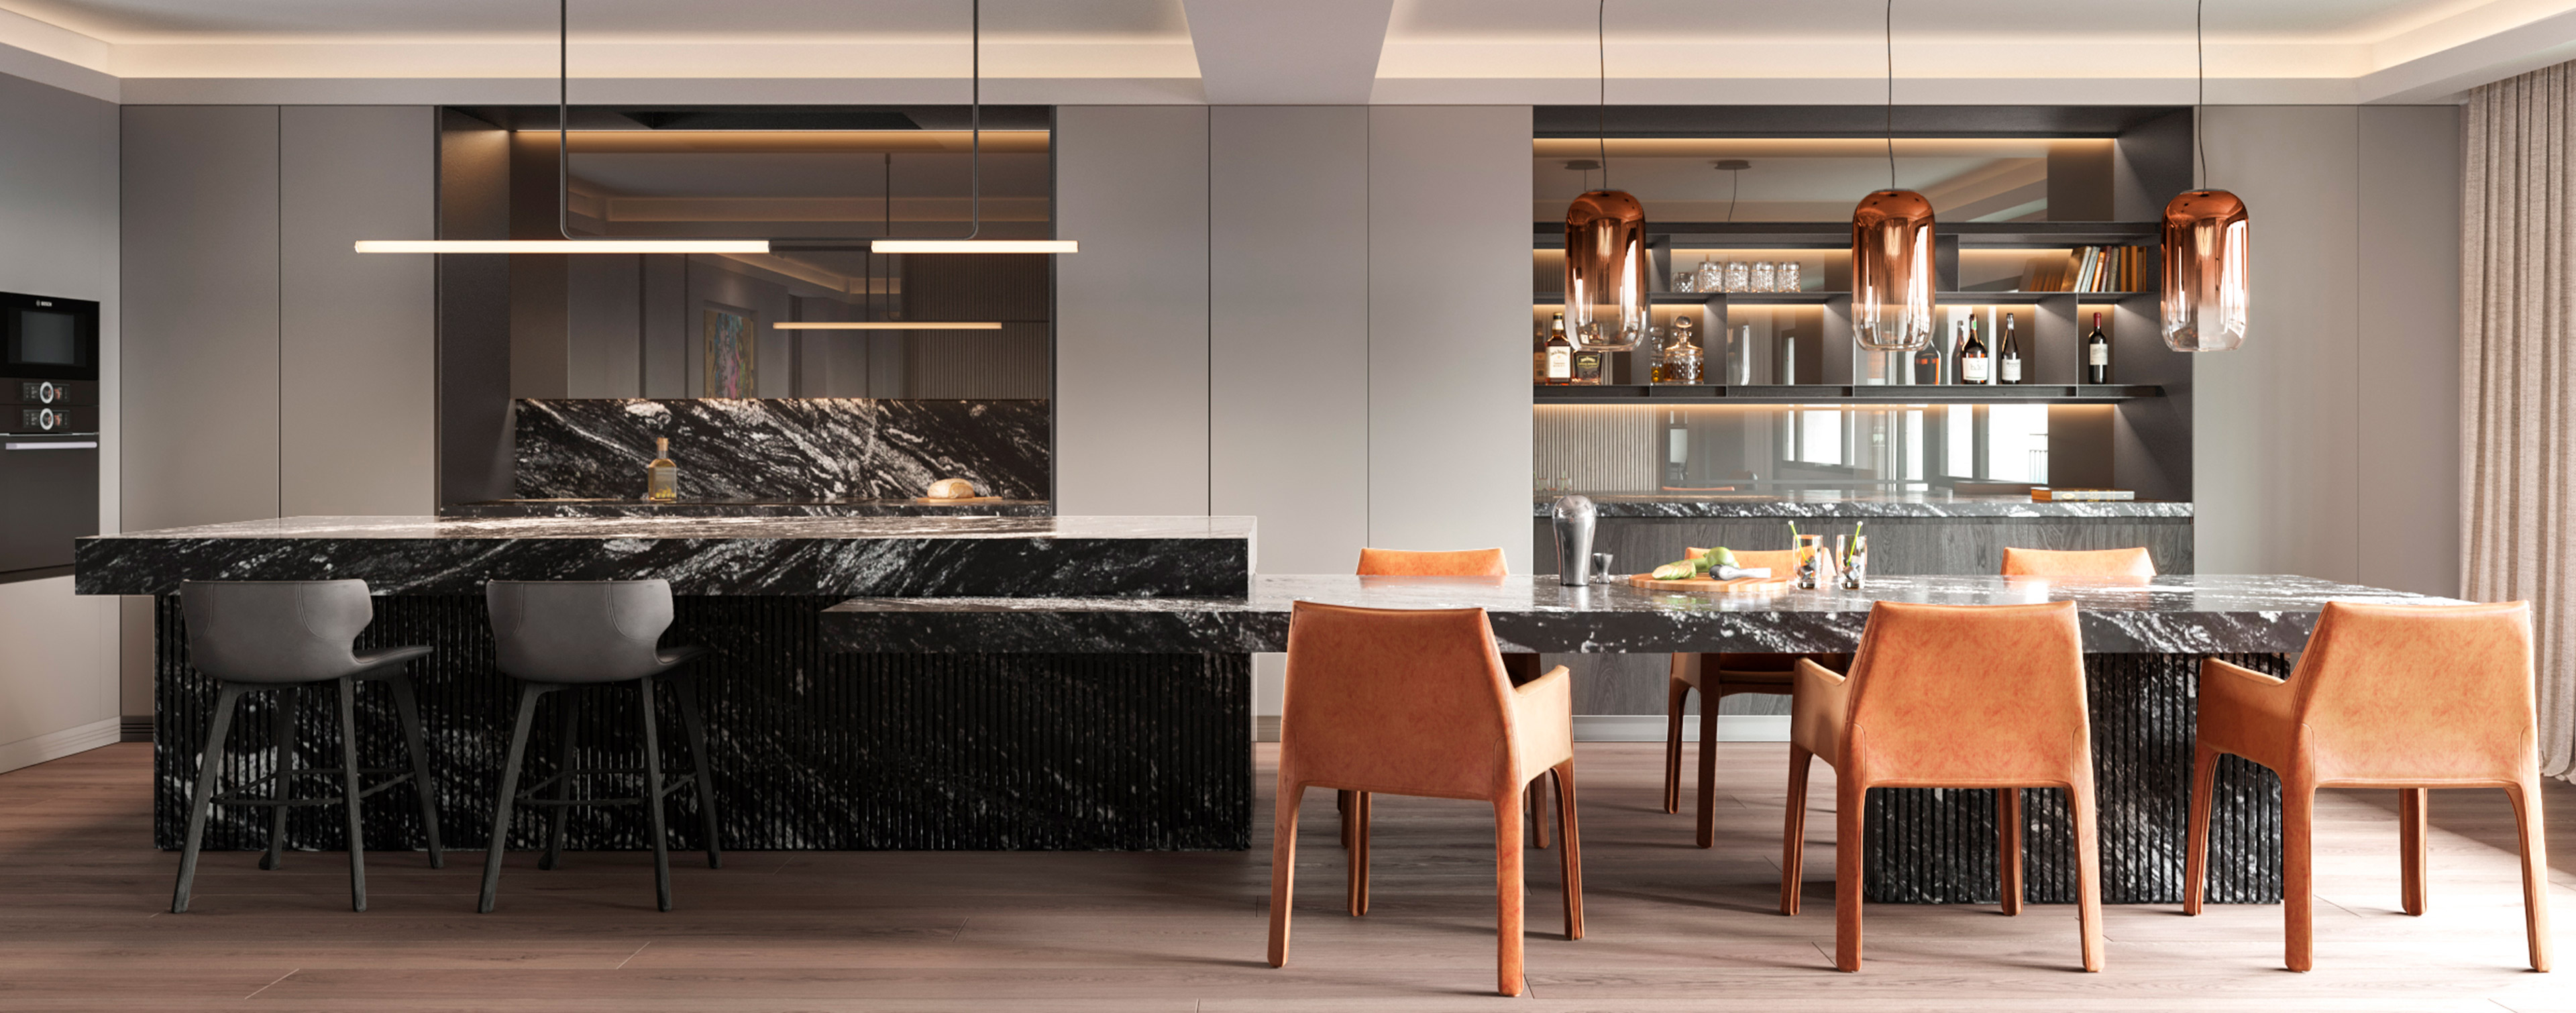 luv studio luxury architects madrid padilla apartment IMG 02 - LUV Studio - Architecture et design - Barcelone